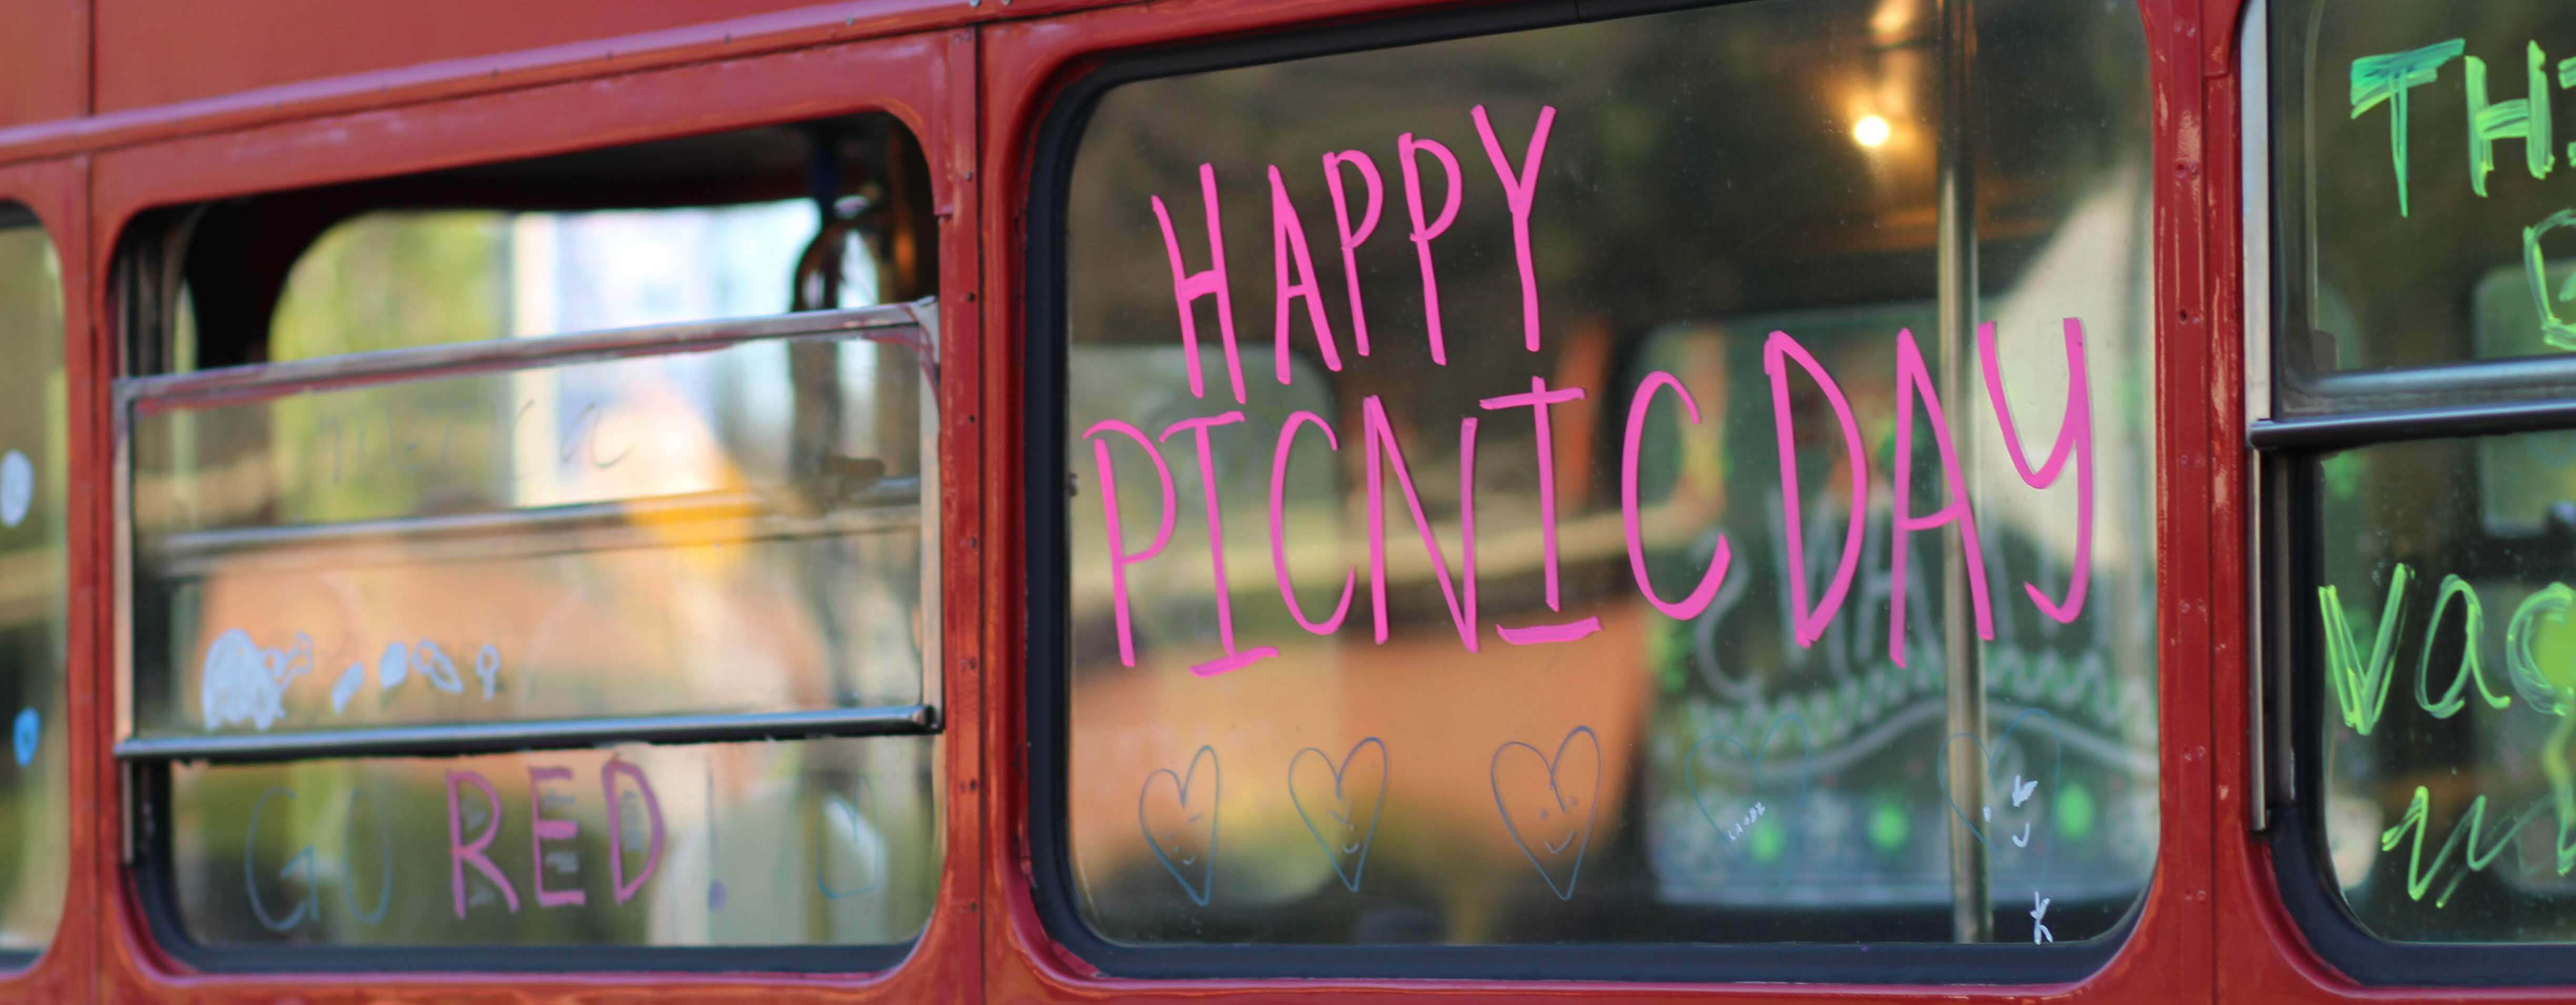 Picnic day bus window 2